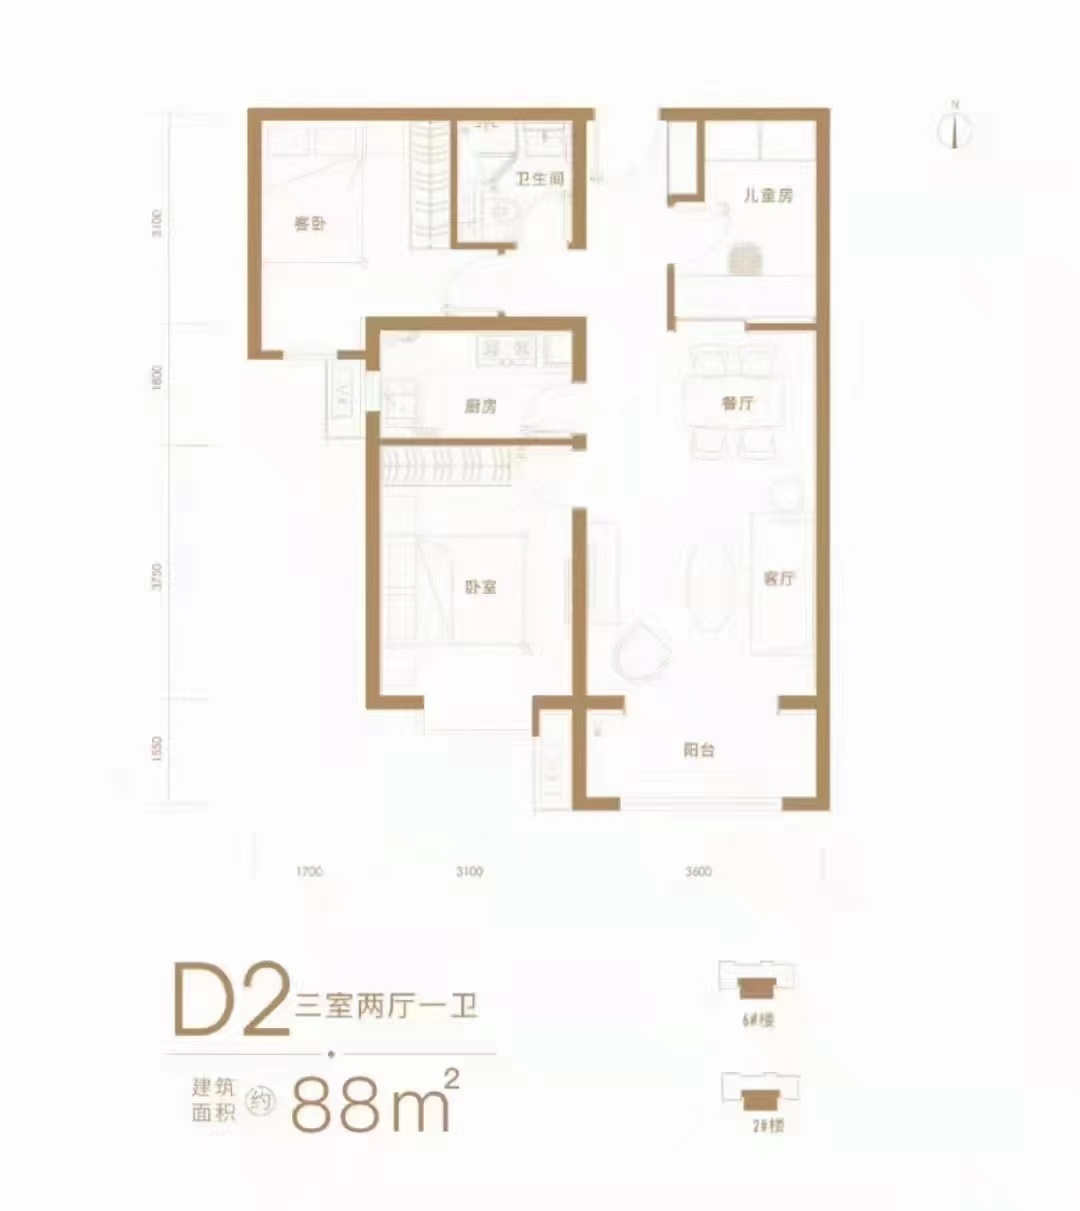 D2 两室两厅一卫 88平米.png